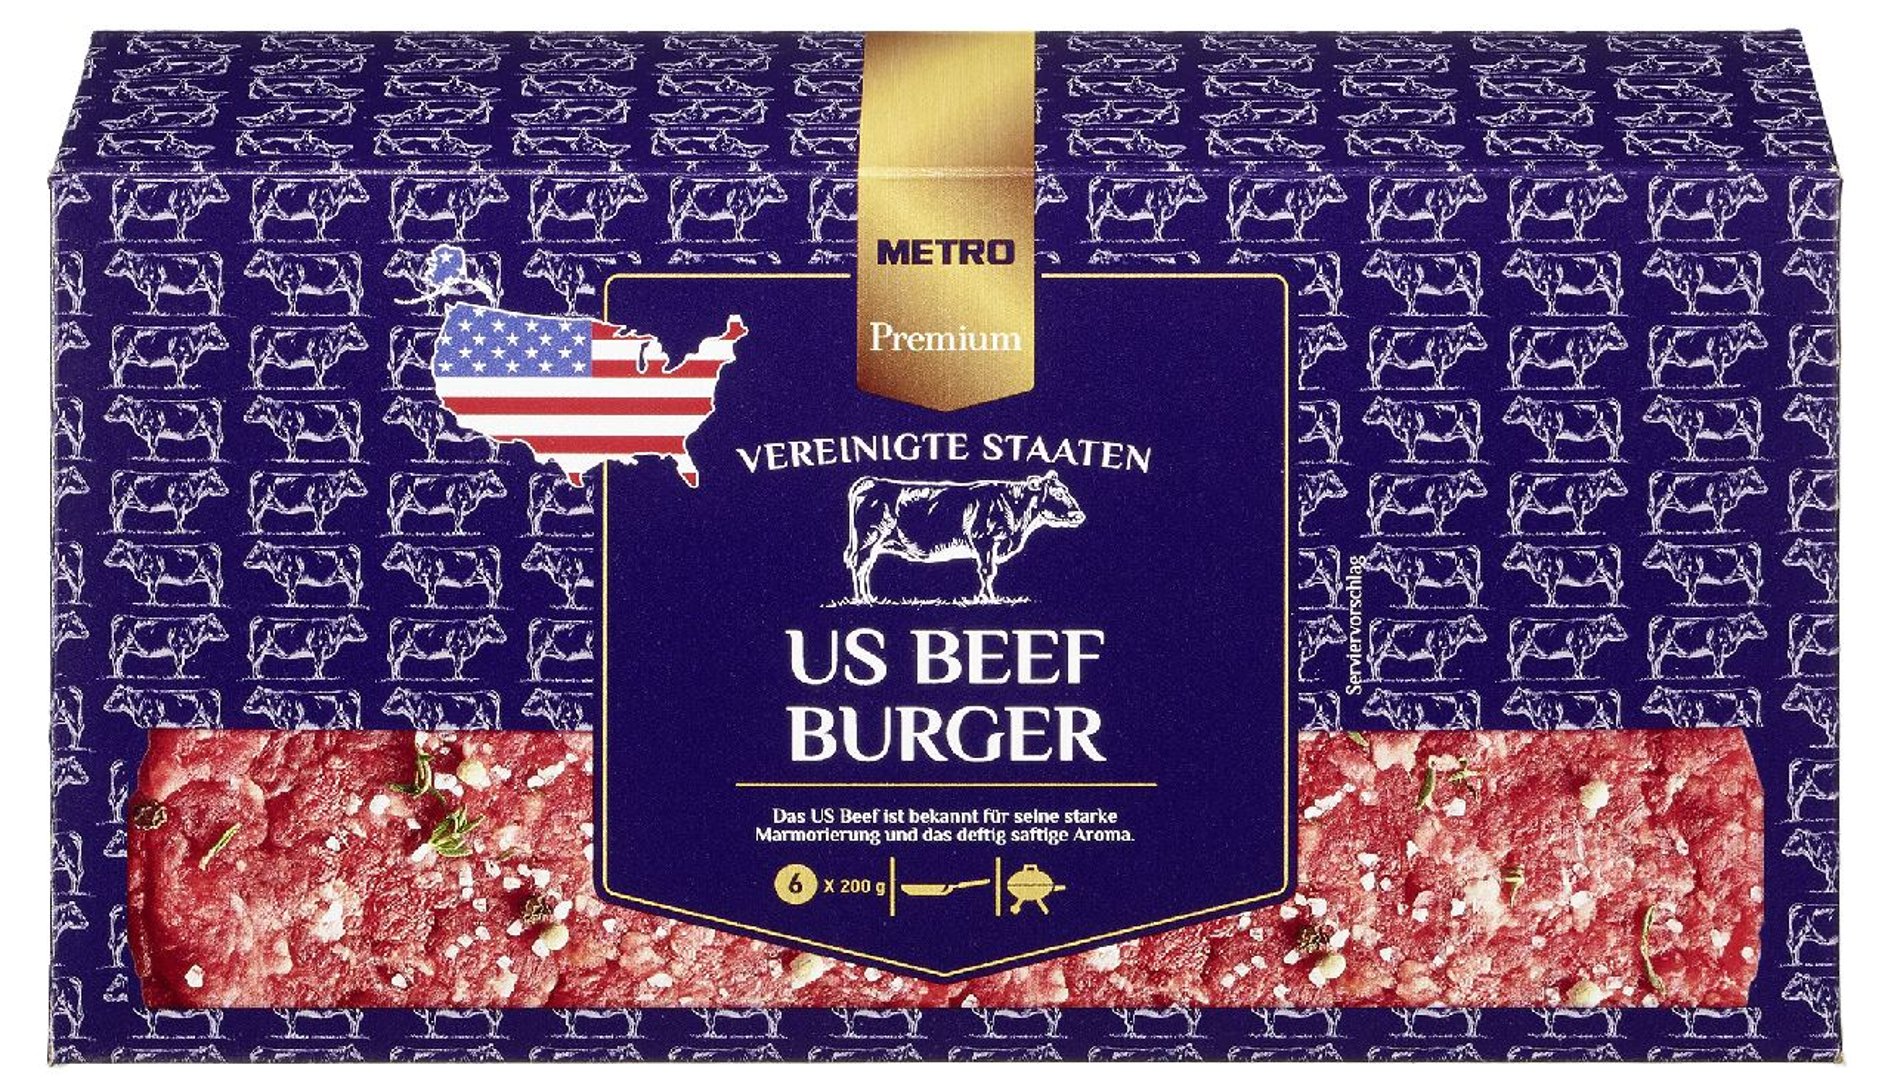 METRO Premium - American Beef Burger tiefgefroren, 6 Stücke à 200 g, vak.-verpackt - 6 x 1,2 kg Packungen